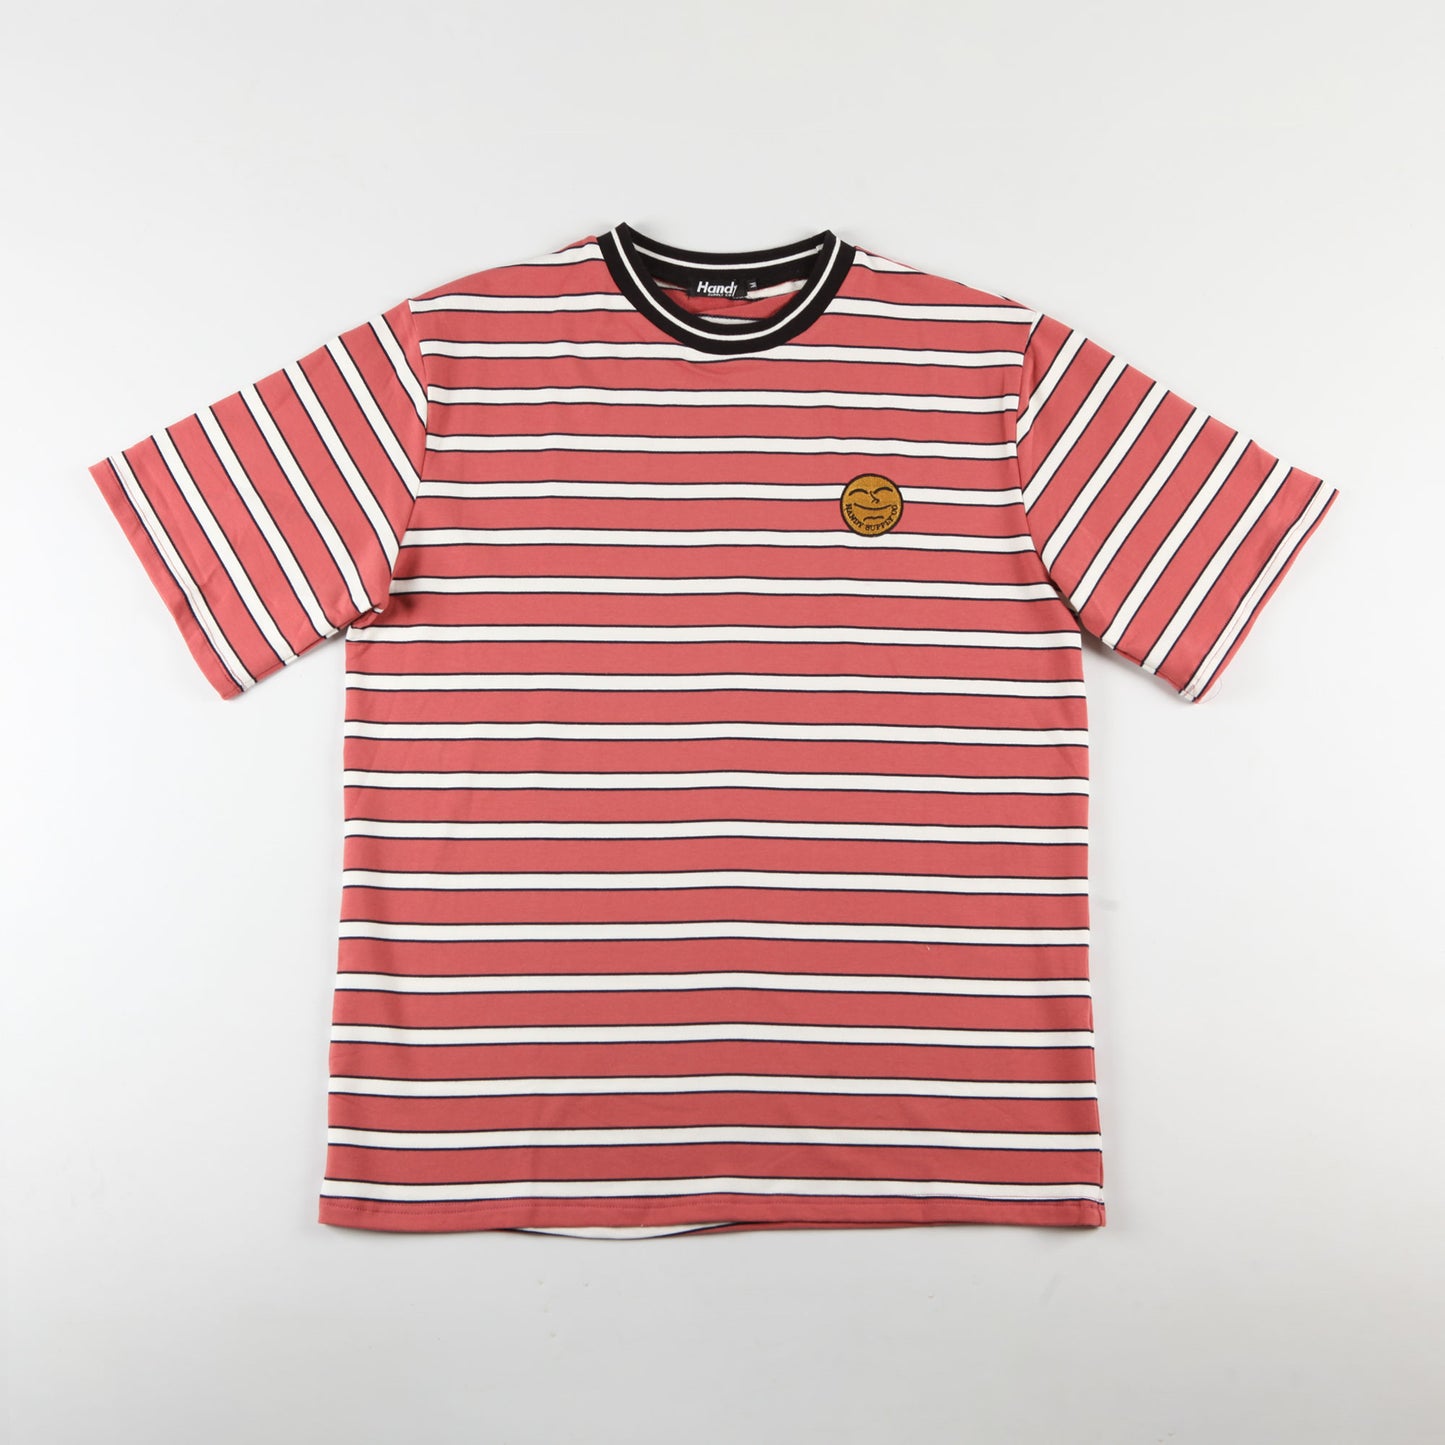 Handy 'Heavyweight Stripe' T-Shirt (Vintage Red)